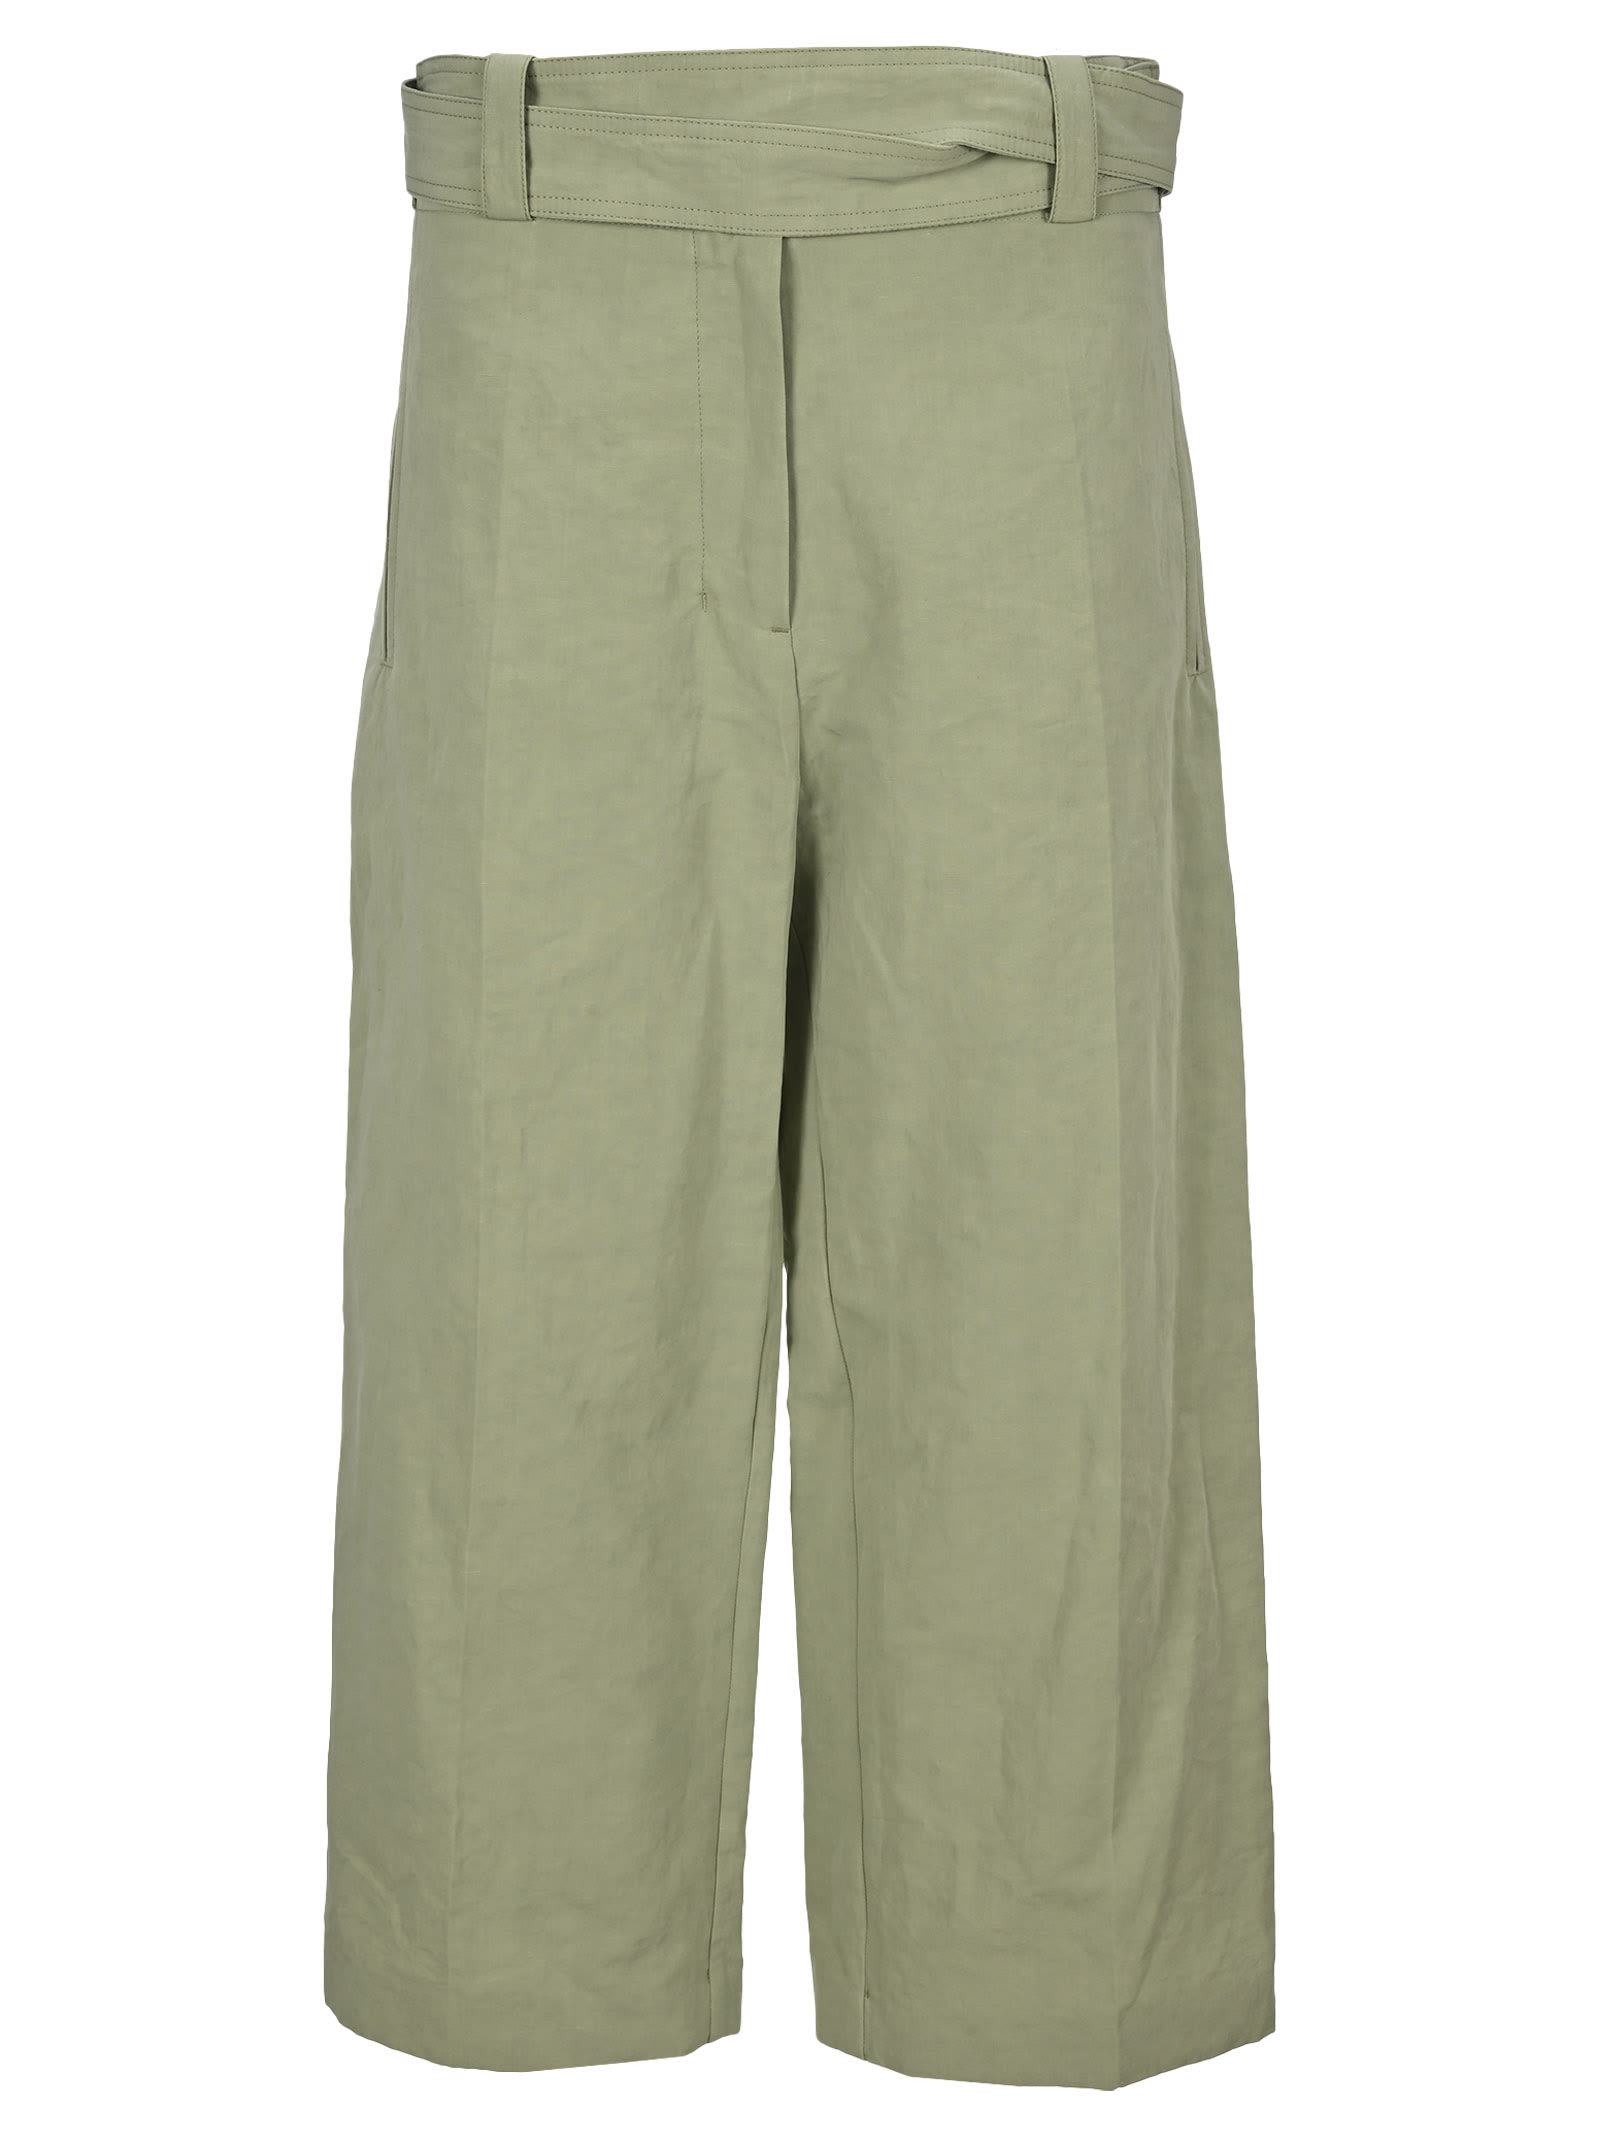 Moncler Genius Moncler 1952 Pants